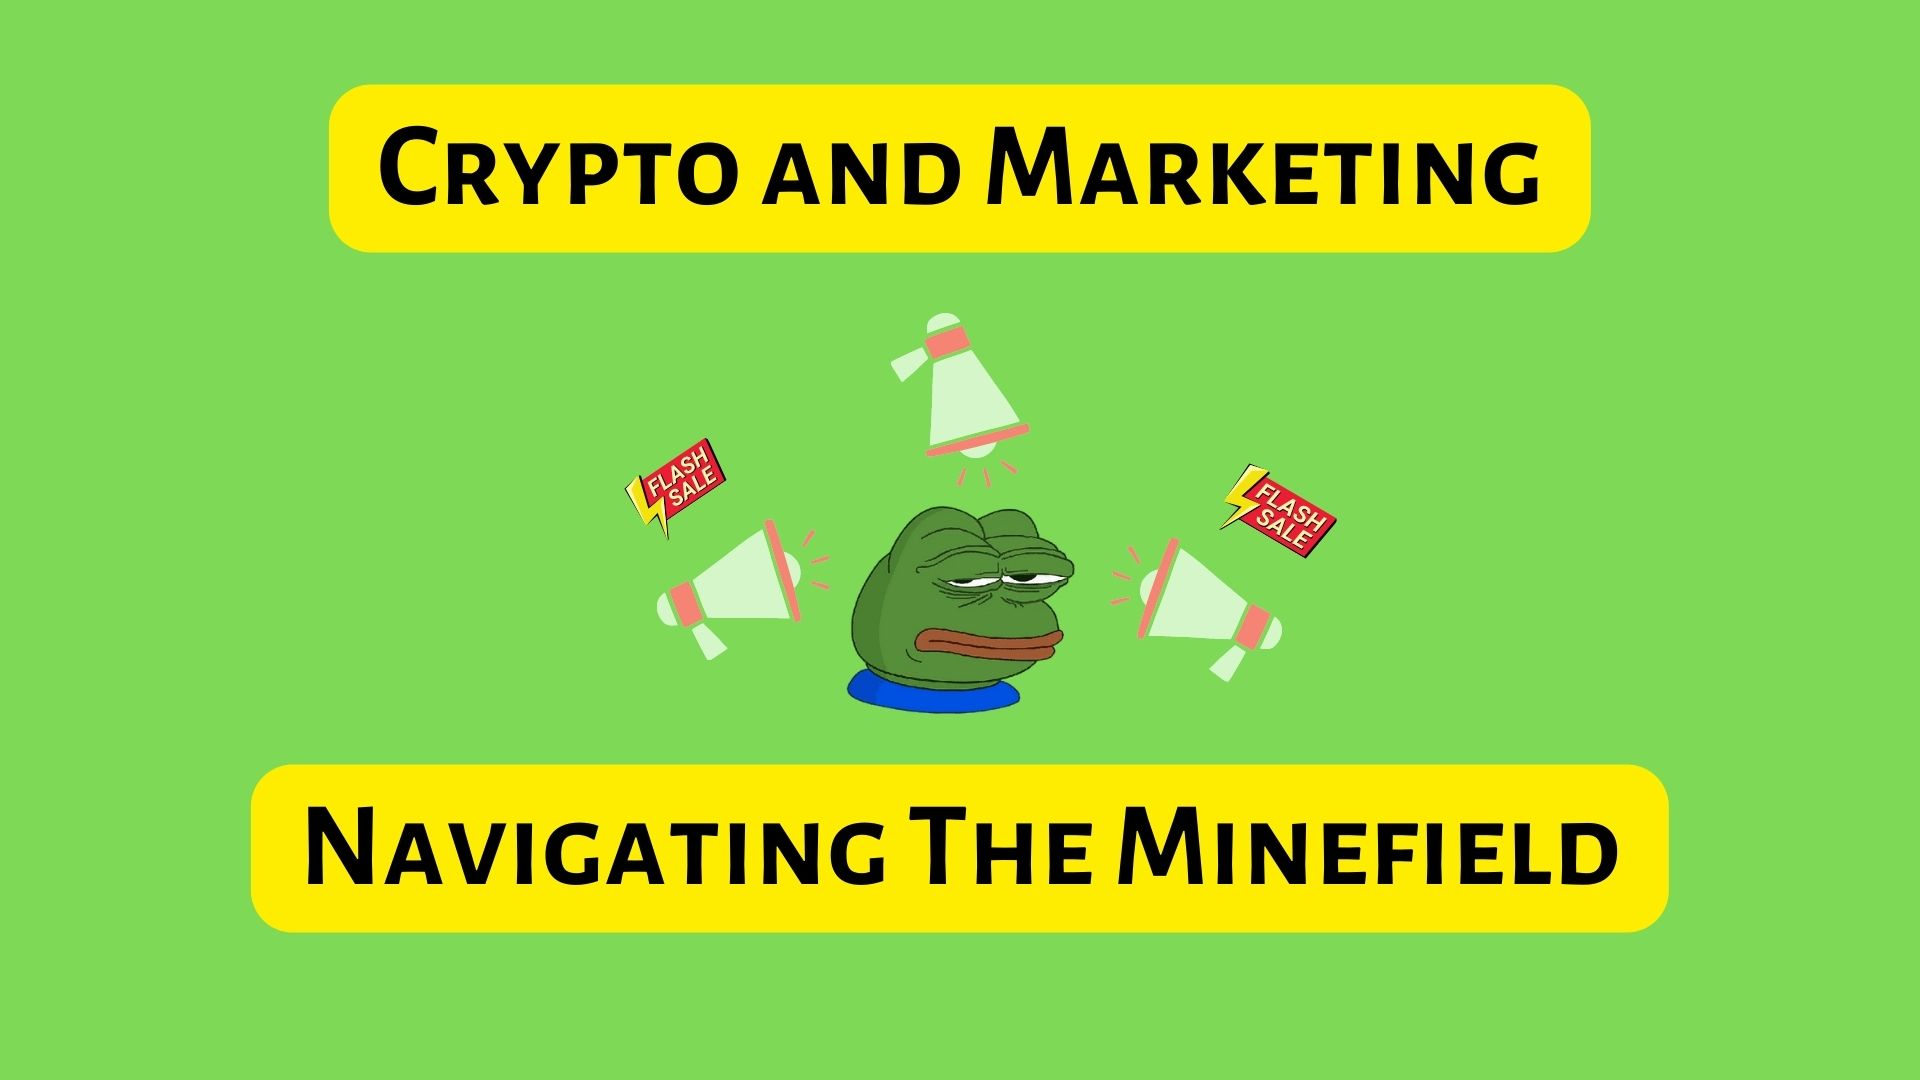 @jerrythefarmer/crypto-and-marketing-navigating-the-minefield